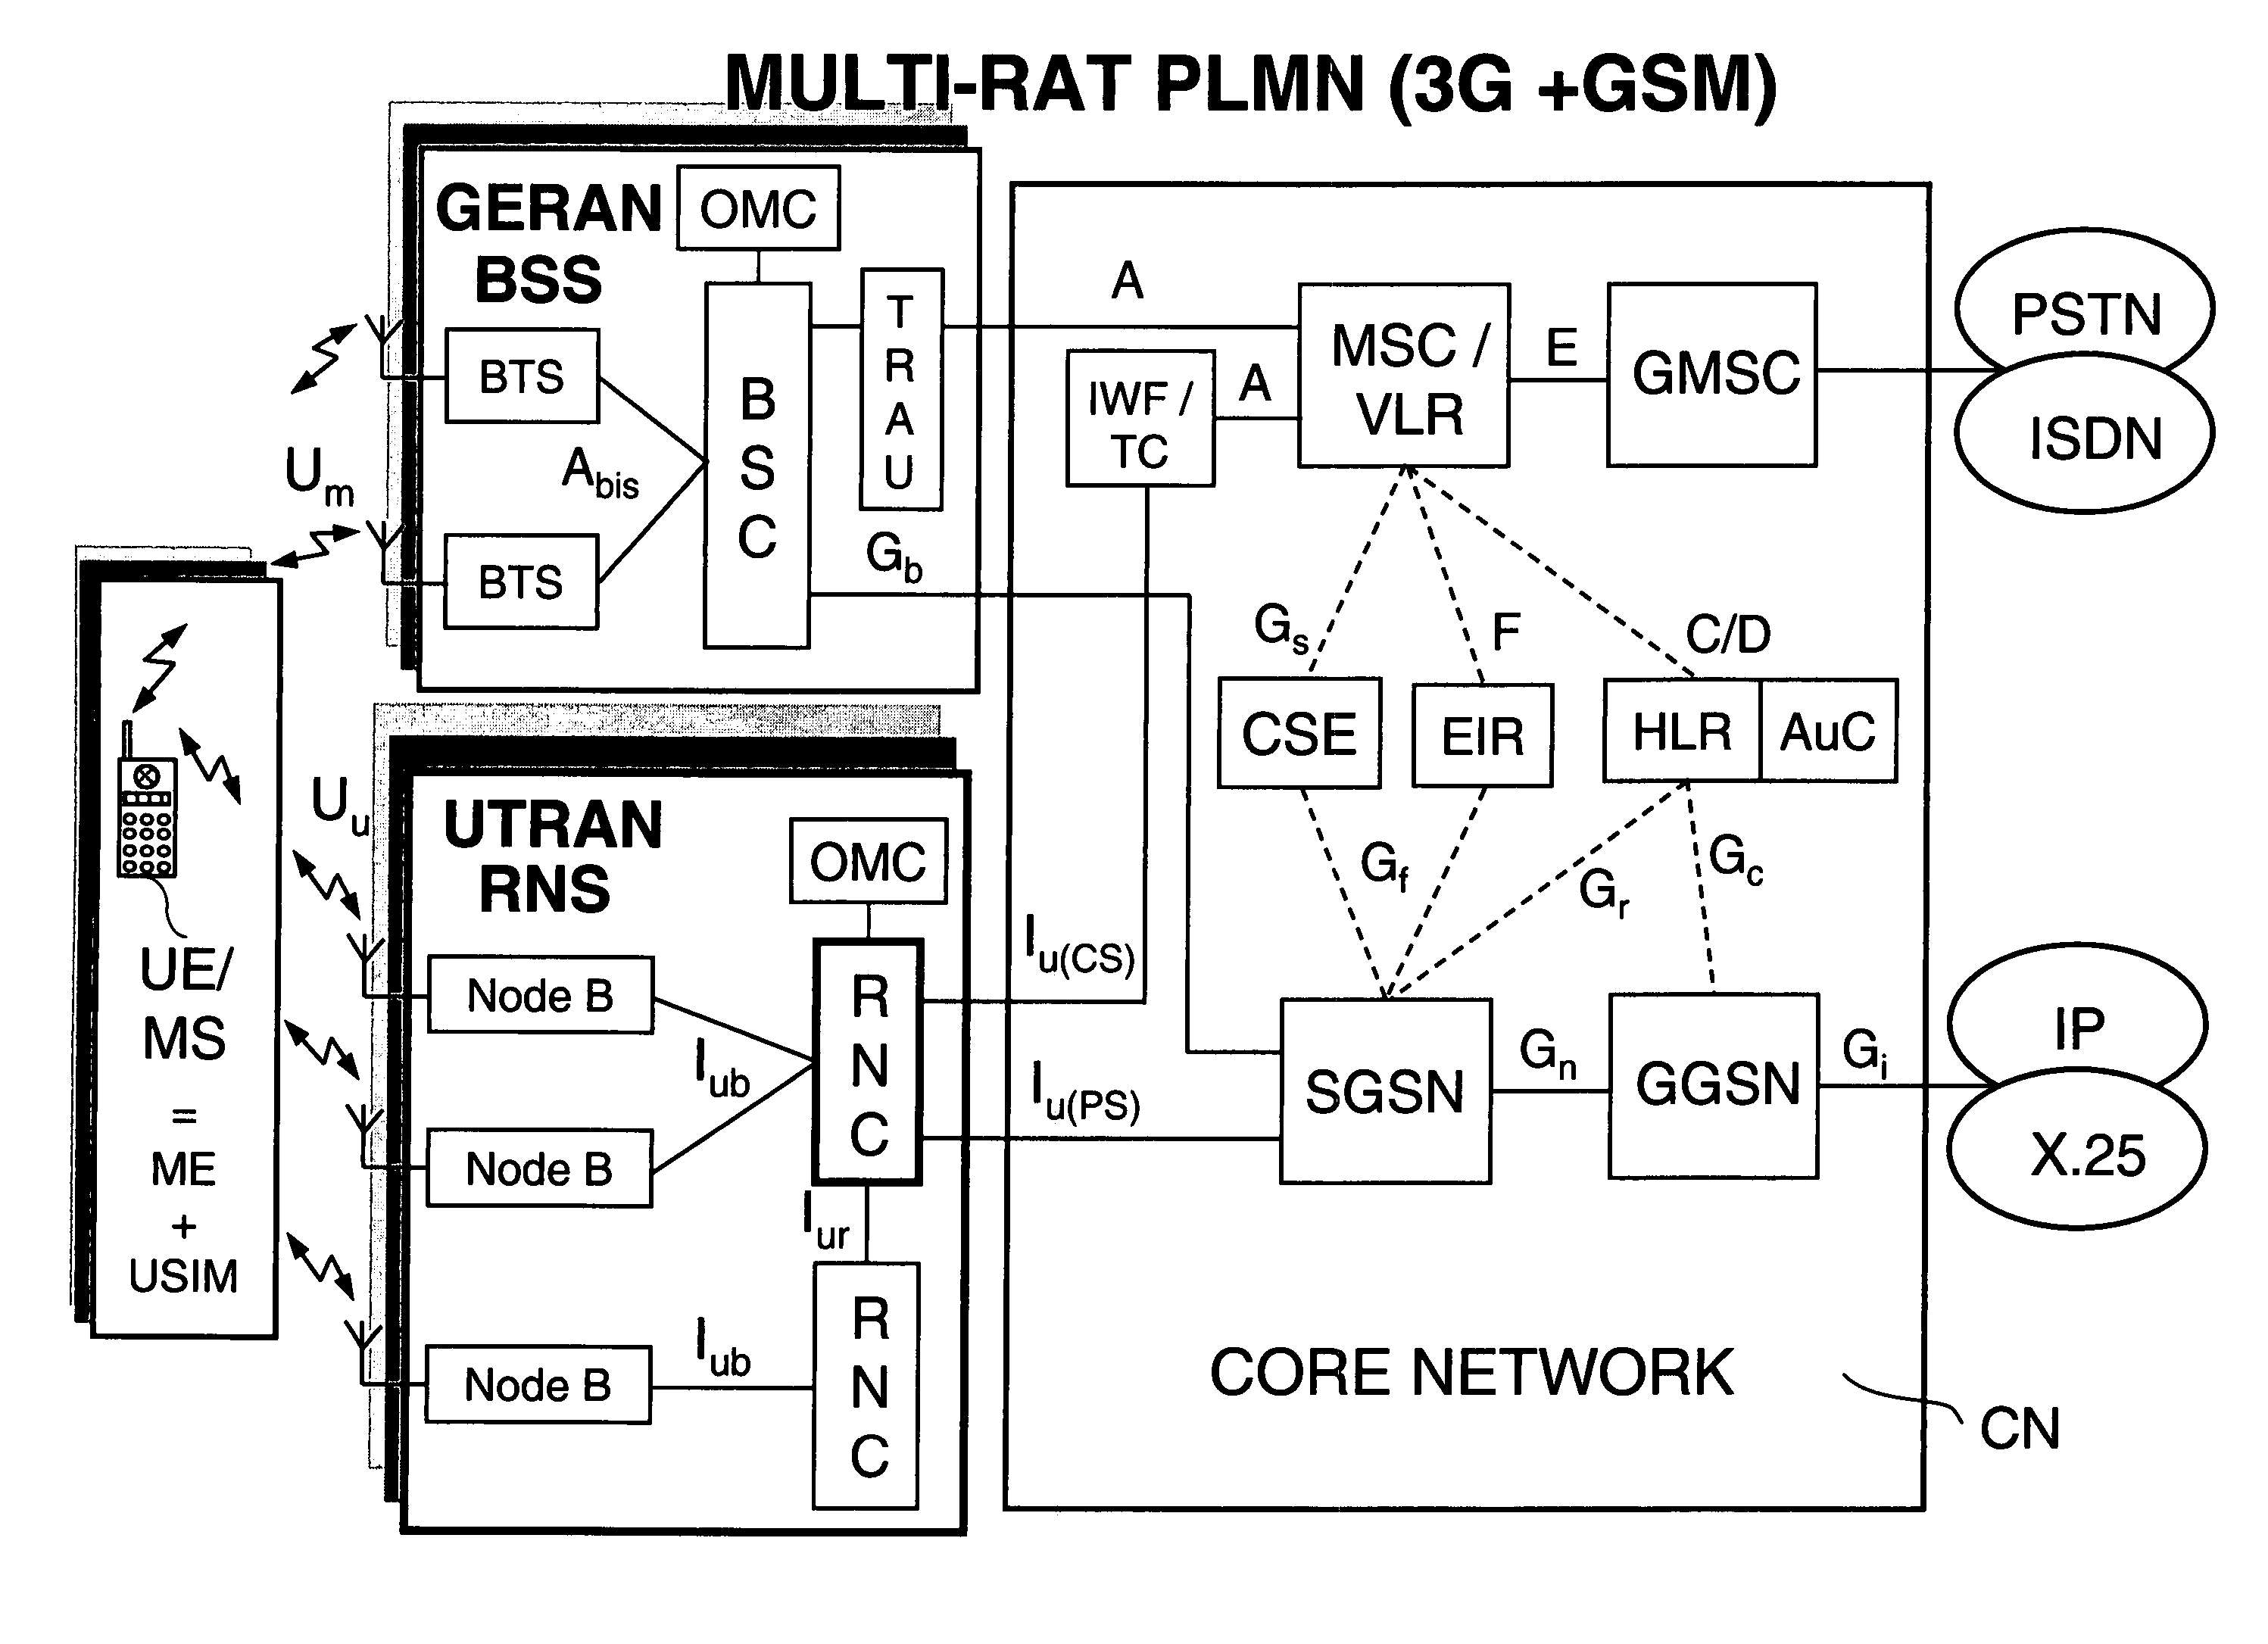 Common radio resource management method in a multi-RAT cellular telephone network